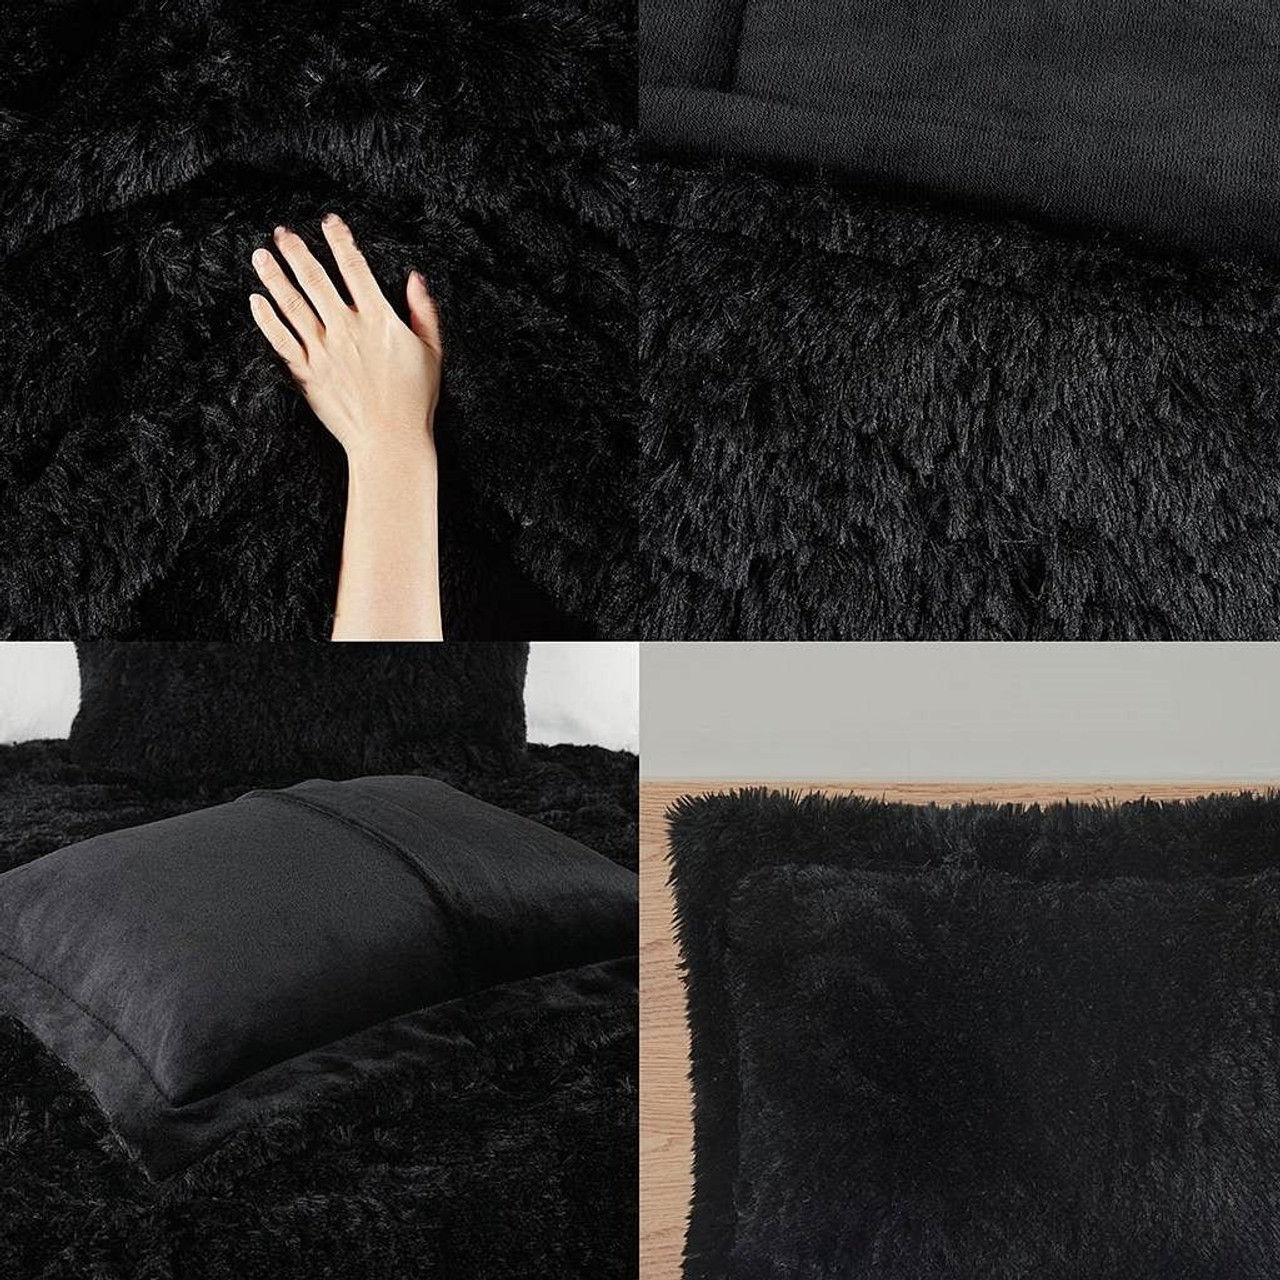 Twin/Twin XL Black Soft Sherpa Faux Fur 2-Piece Comforter Set with Shams